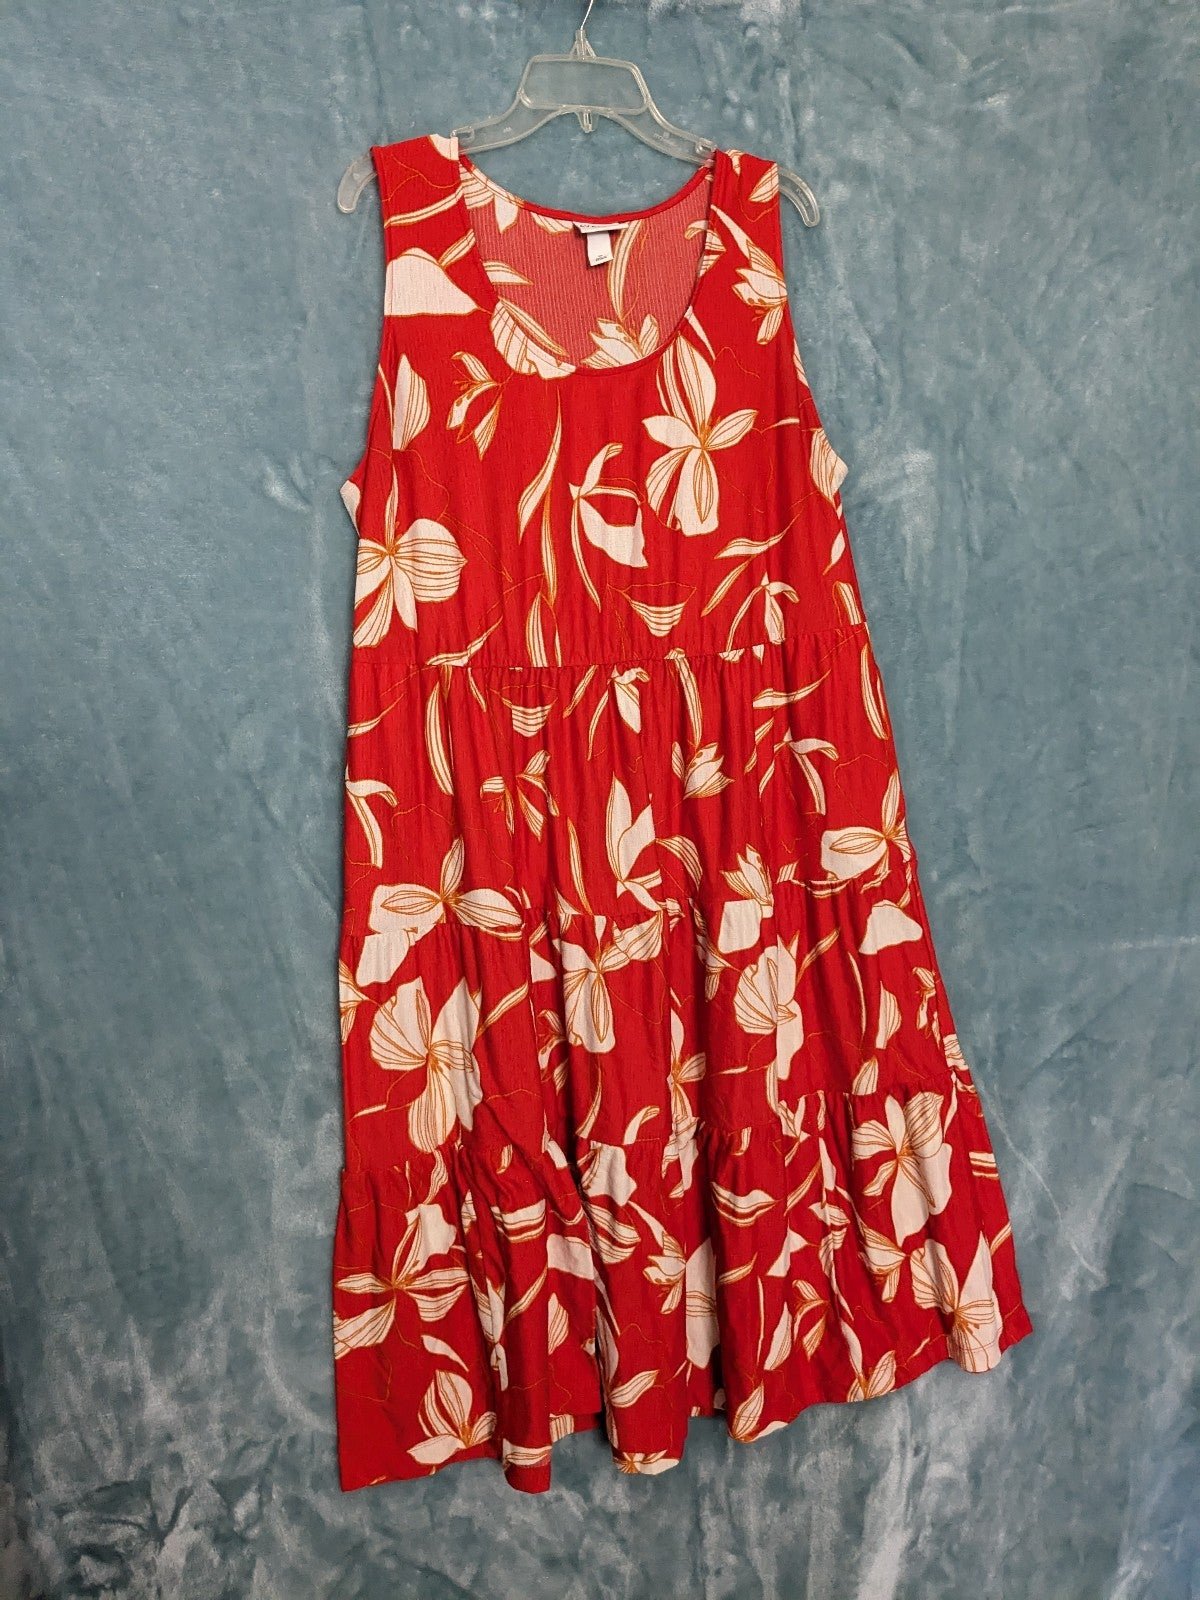 Special offer  Ava & Viv 1X Blood Orange Tiered Dress w Pockets NO7bi3rNc well sale